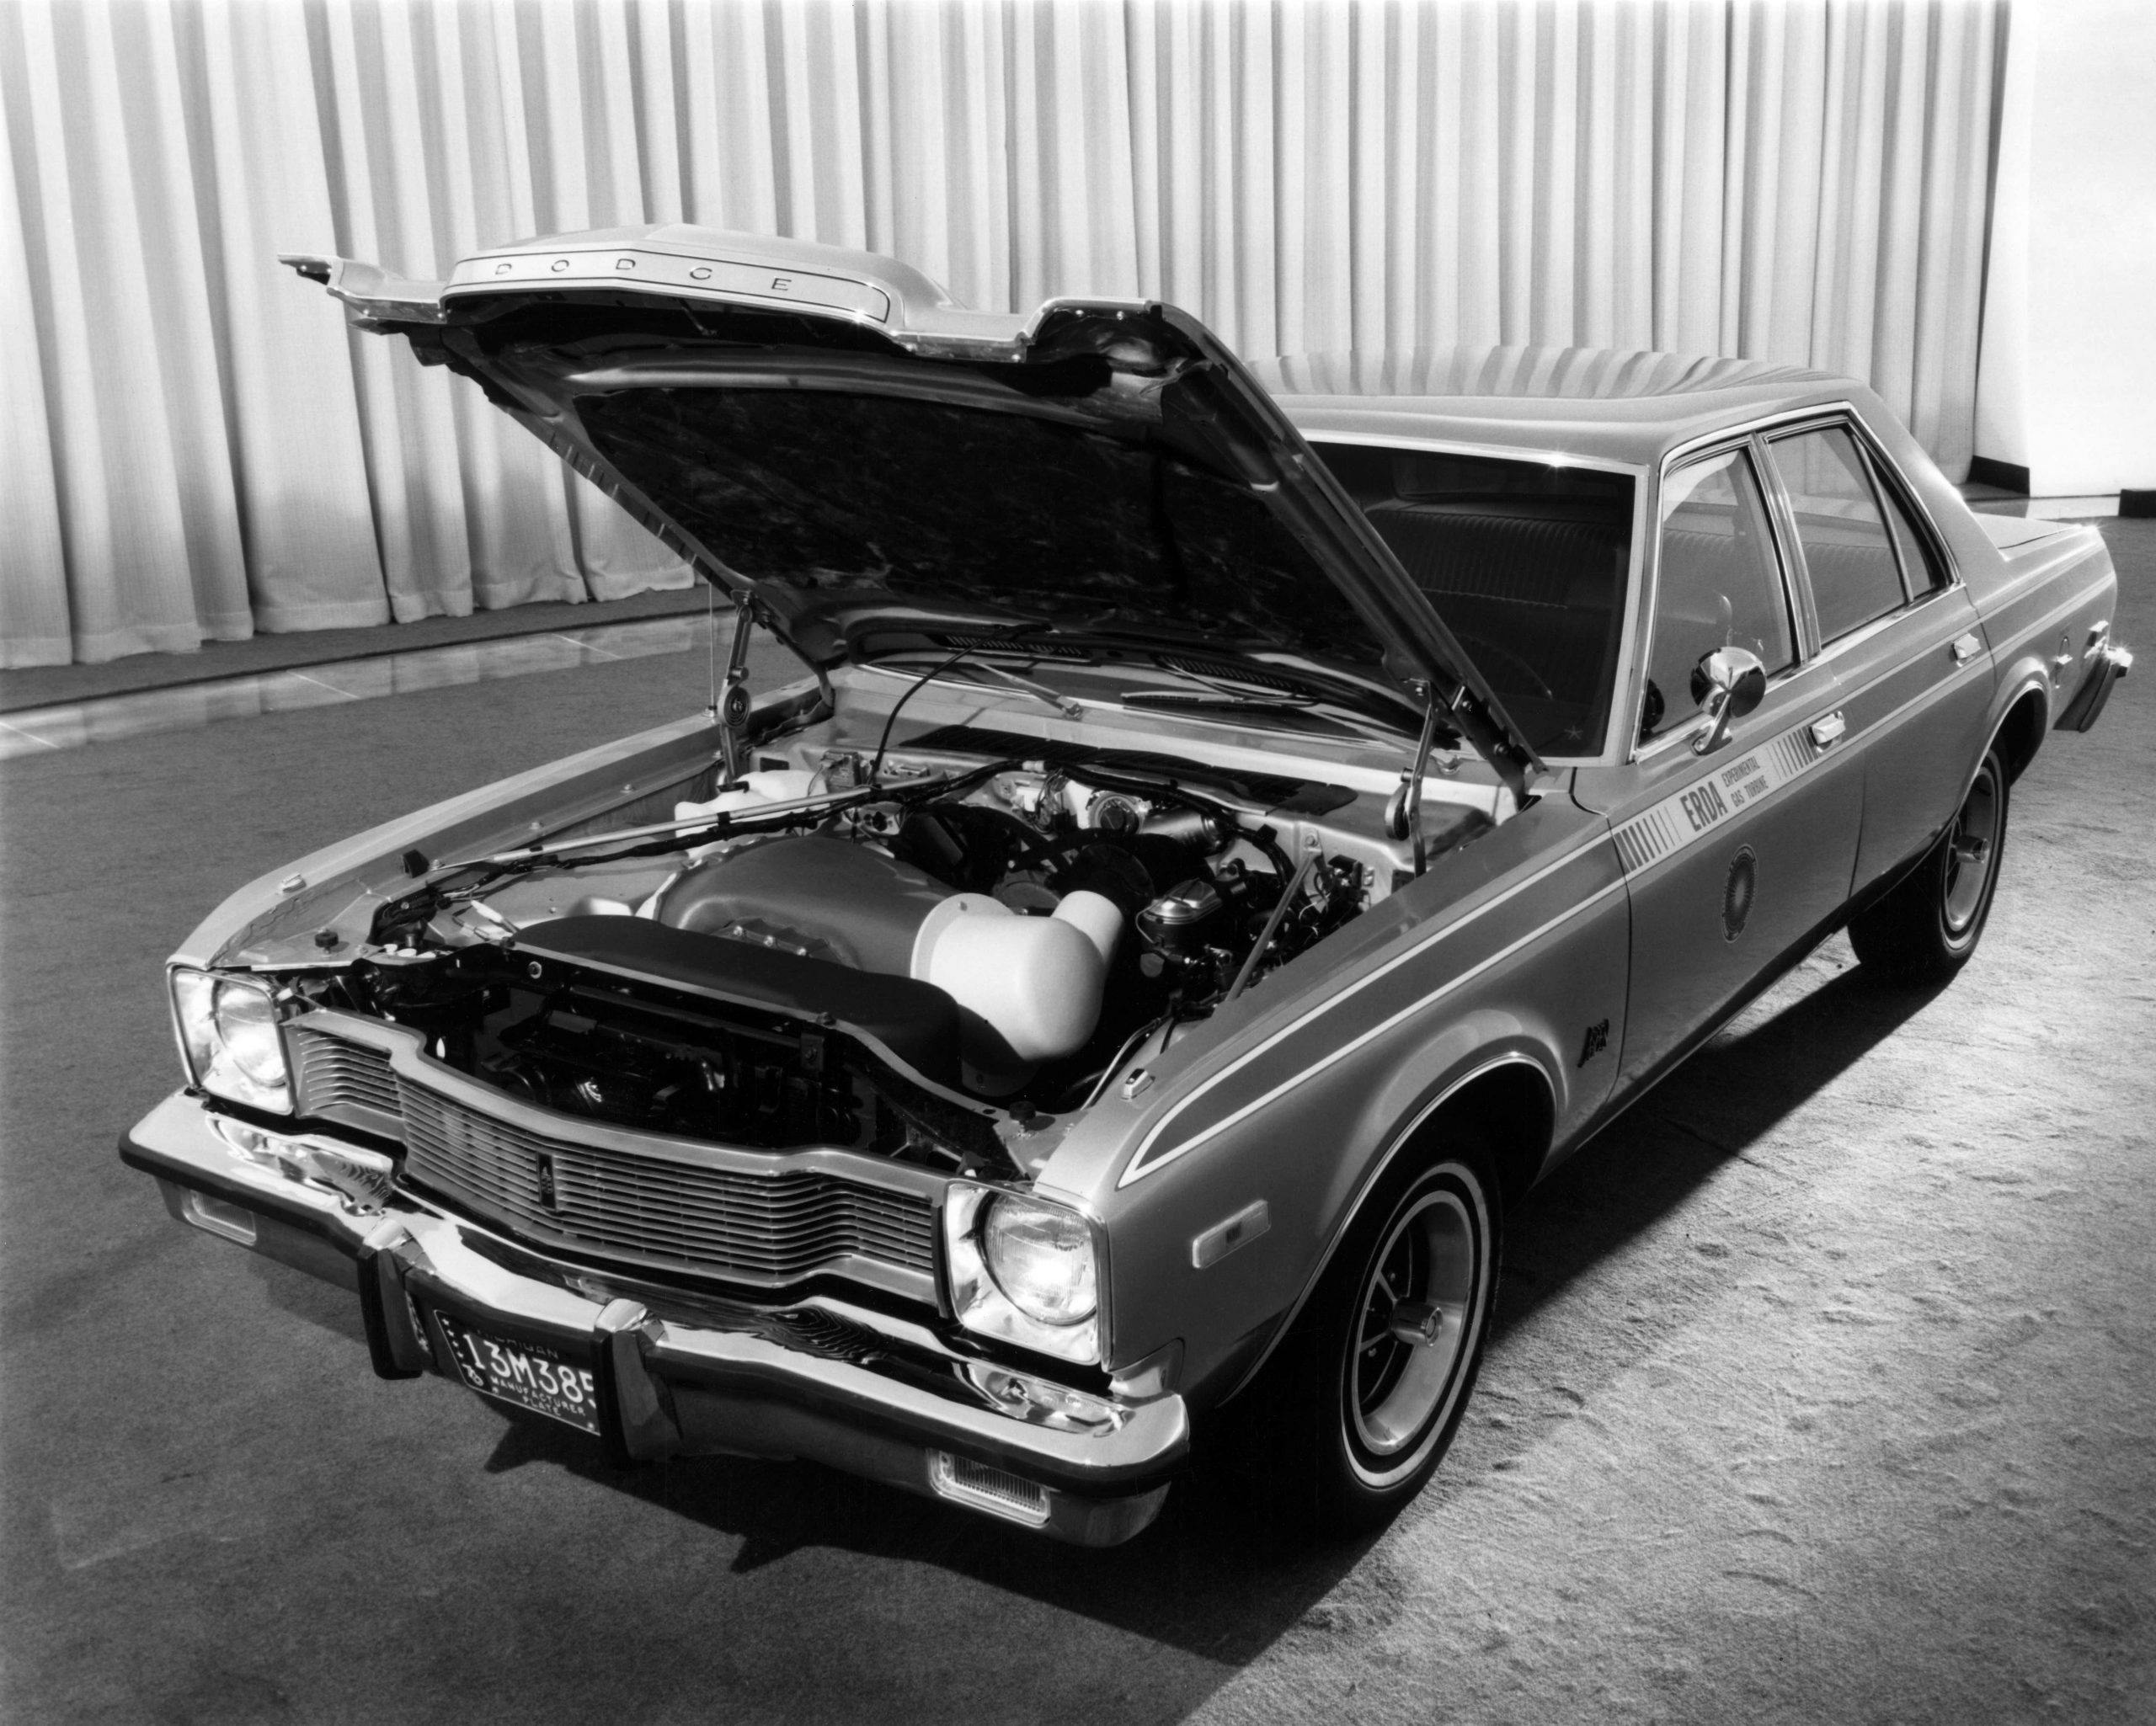 Chrysler Turbine history - 1976 Dodge Aspen Turbine front - hood up